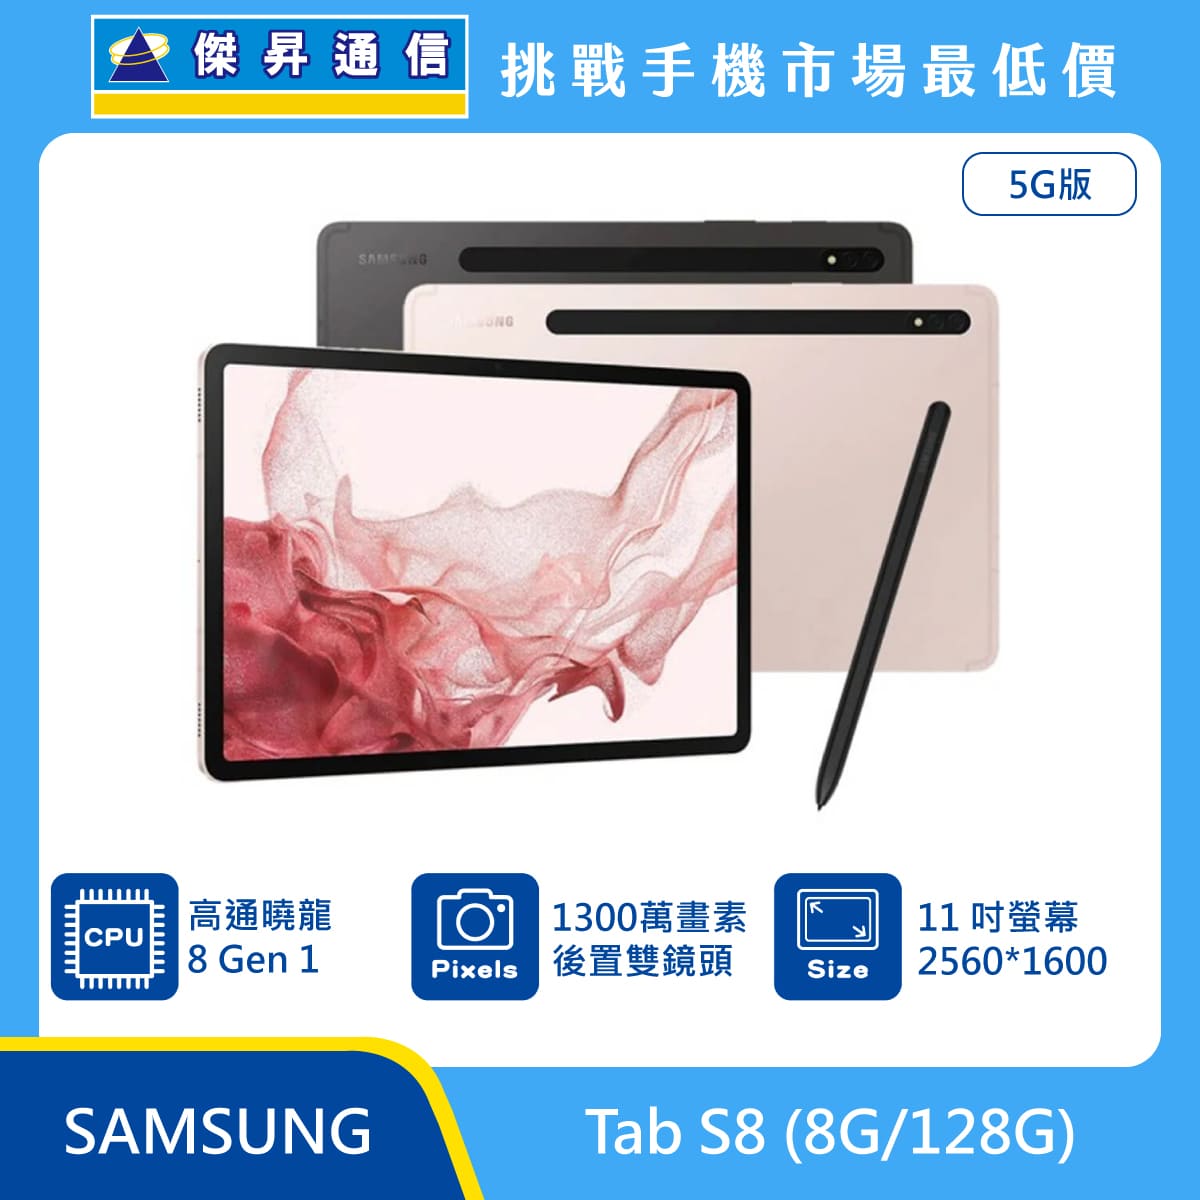 SAMSUNG 平板 Tab S8 (8G/128G)